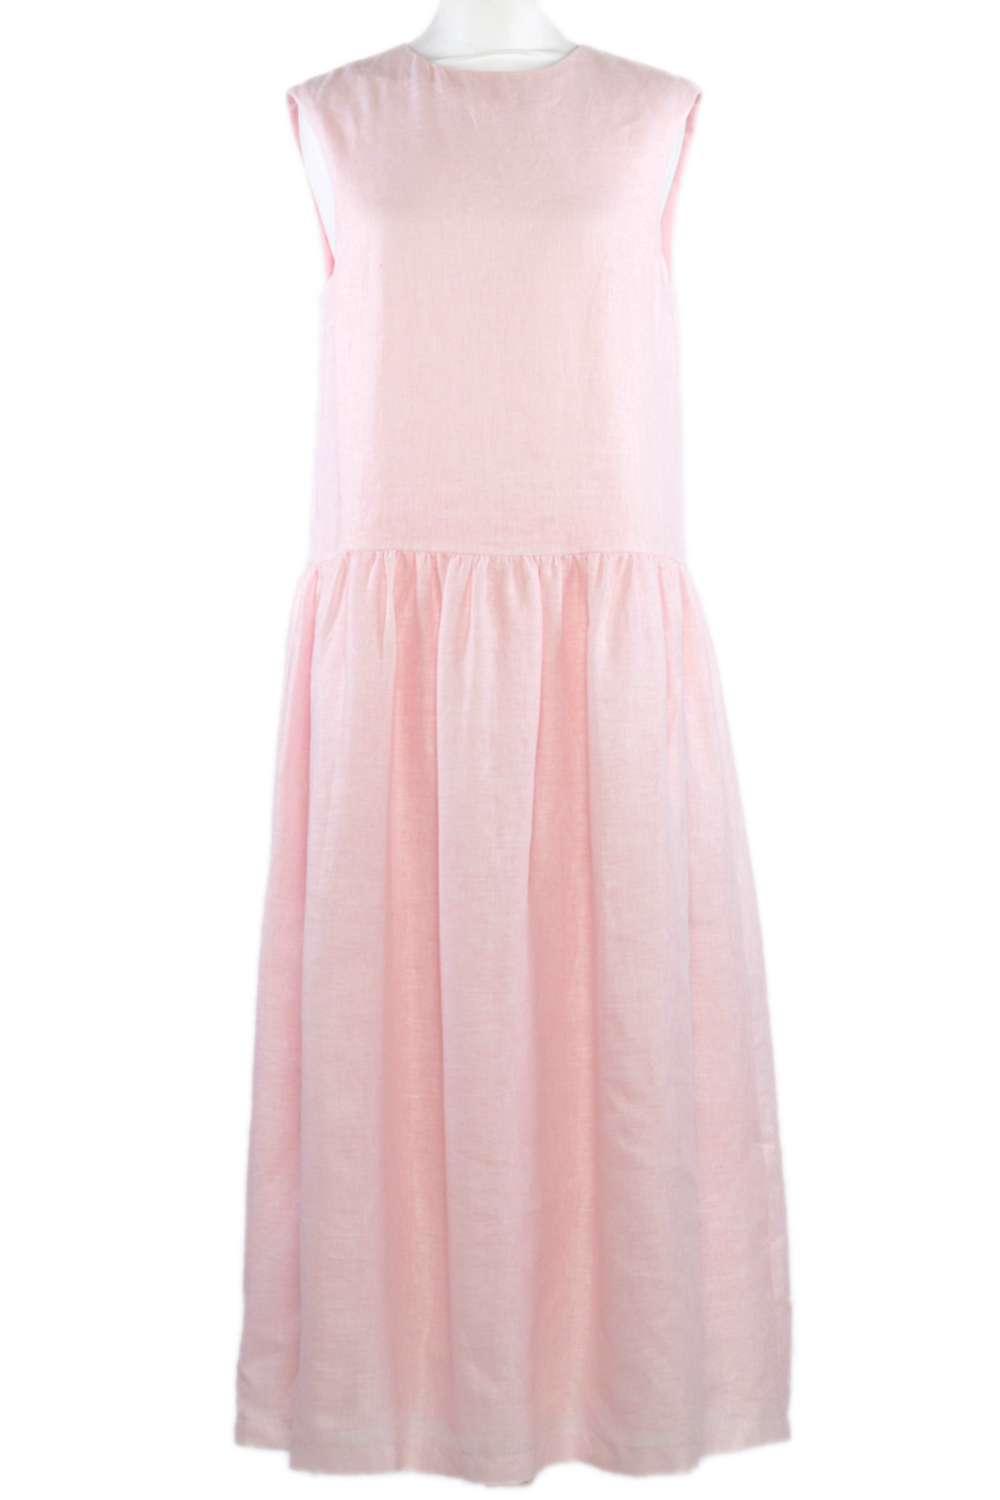 A long pink linen drop waisted dress for bridesmaids - The Little Wedding Company